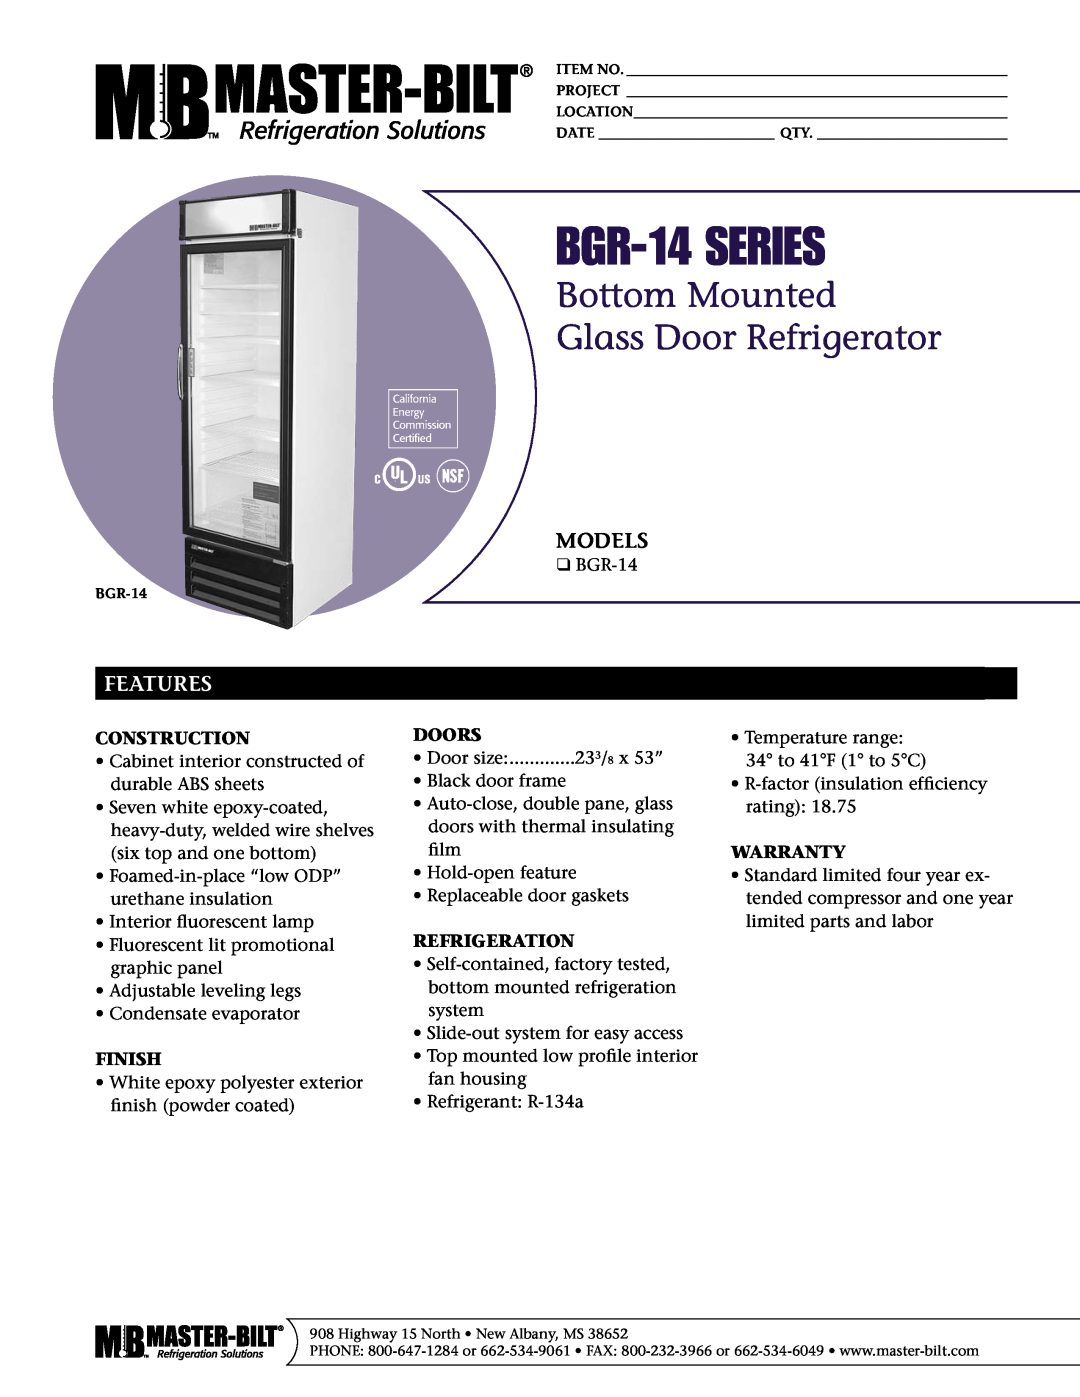 Master Bilt warranty Models, Features, BGR-14 SERIES, Bottom Mounted Glass Door Refrigerator, Construction, Finish 